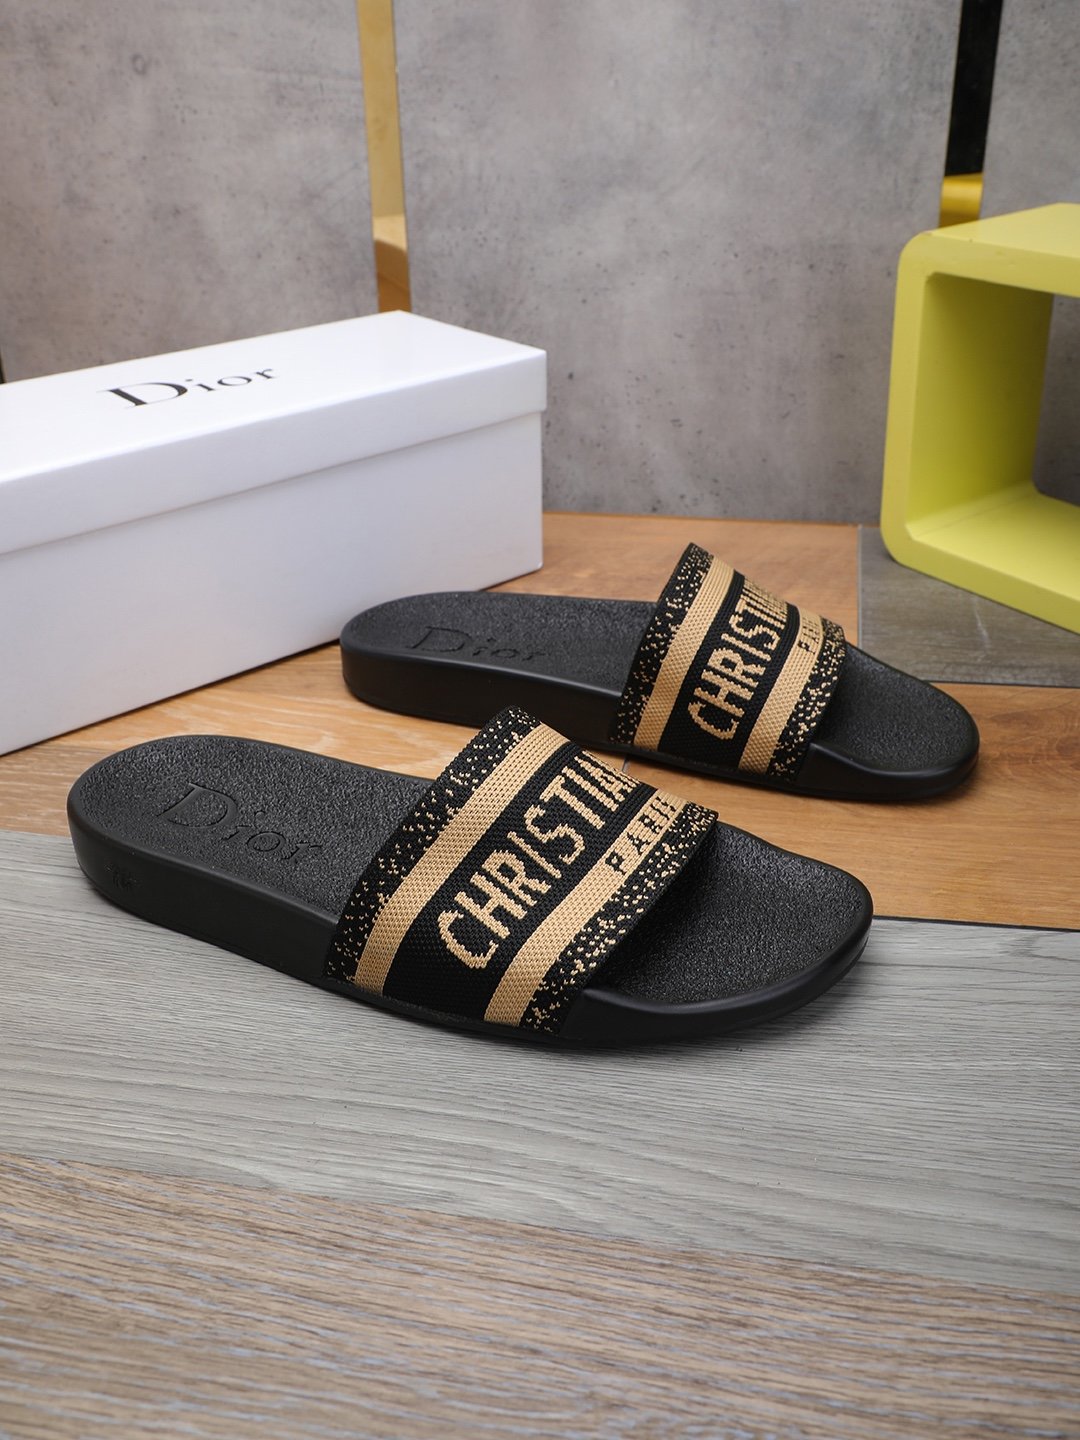 Dior Men's 2021 NEW ARRIVALS Slippers Sandals Shoes